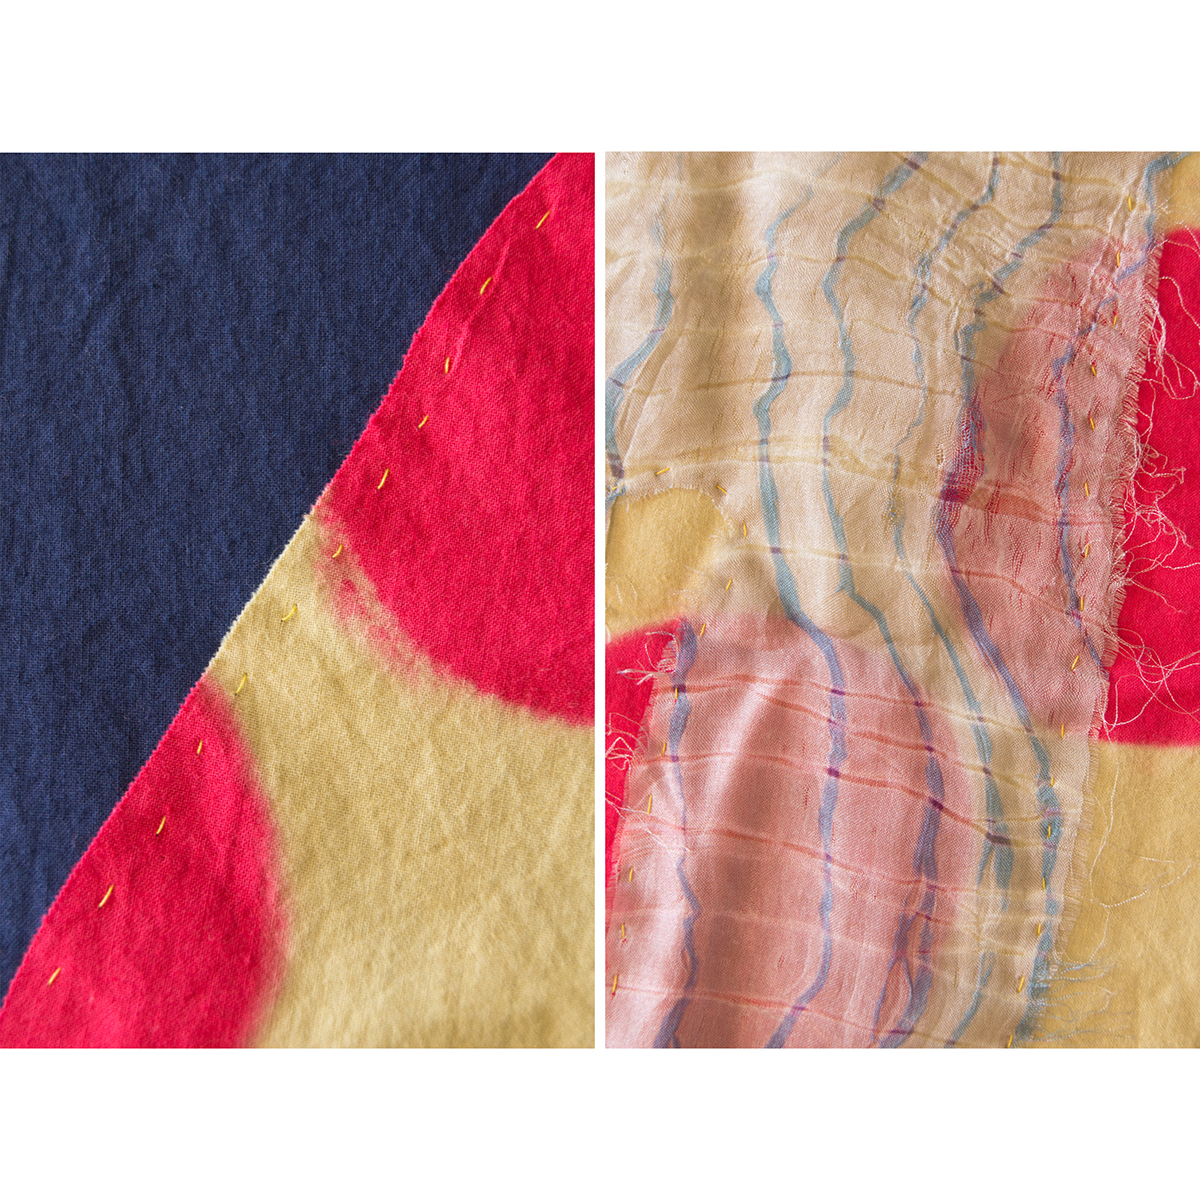 fiber fibers dye dyework fabric textile weaving applique Sumi ink natural dyes